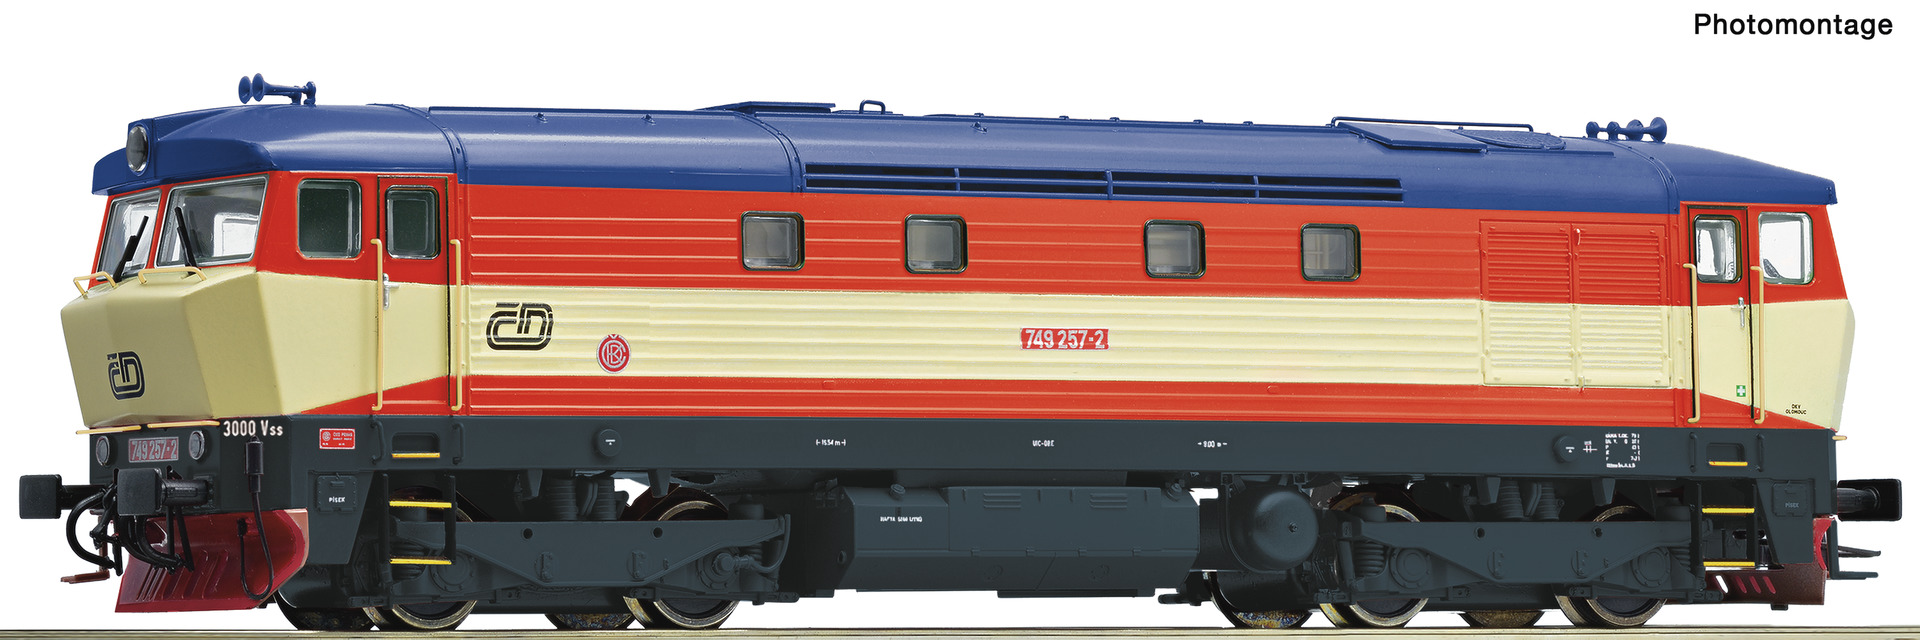 Roco 7300008  Diesel locomotive 749 257-2, CD